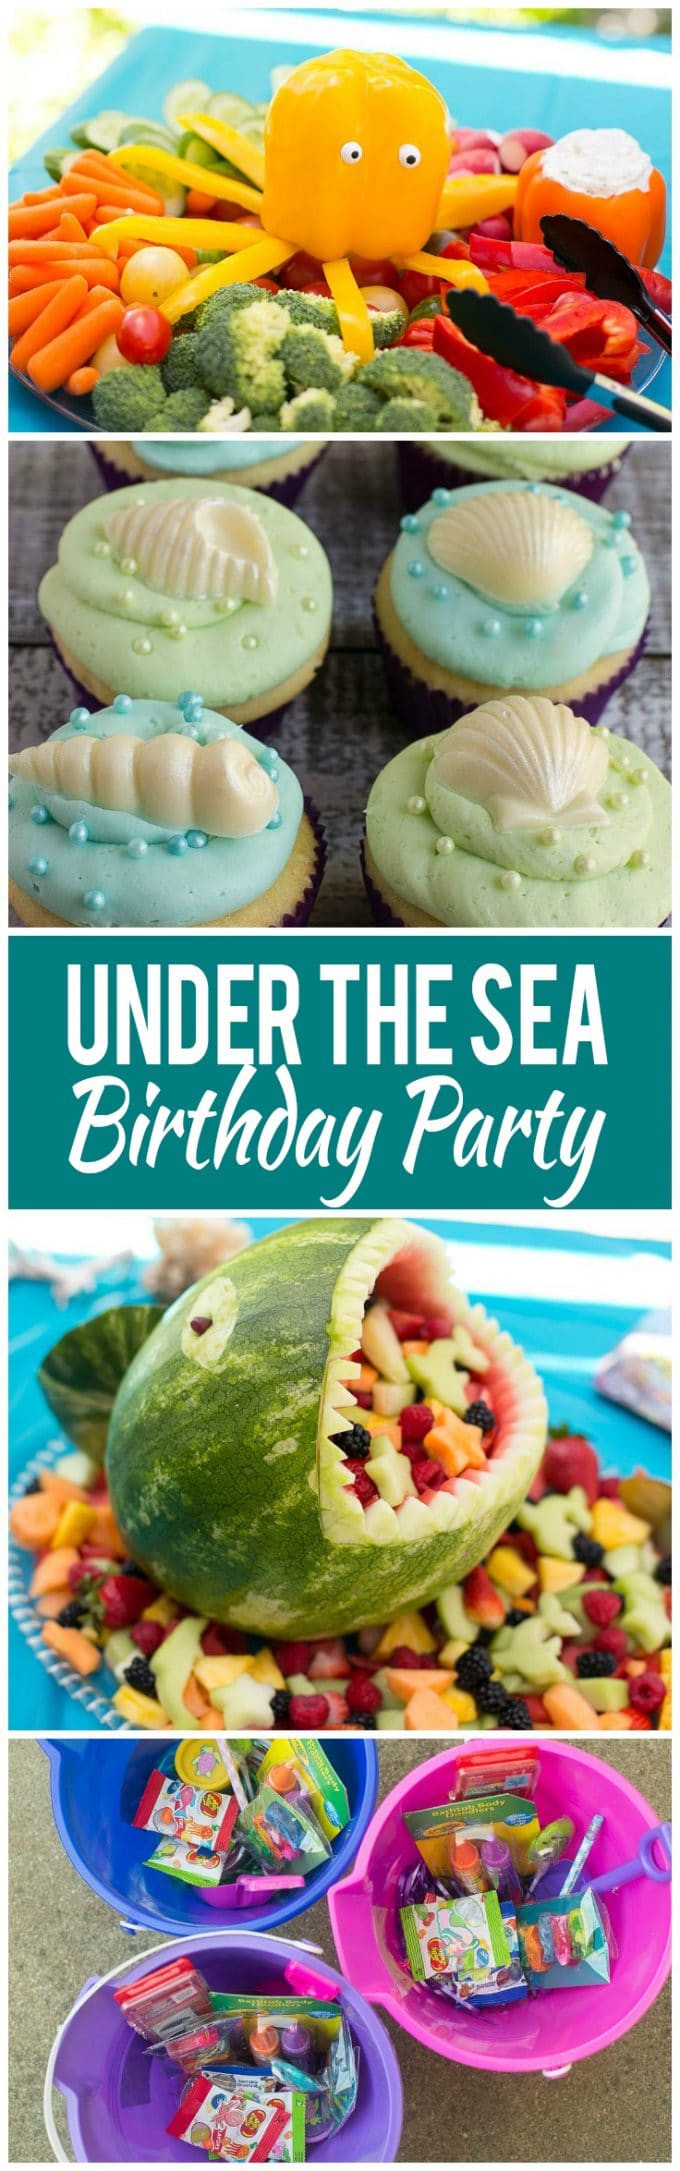 Mermaid Birthday Party Food Ideas
 Mermaid Birthday Party Under the Sea Dinner at the Zoo